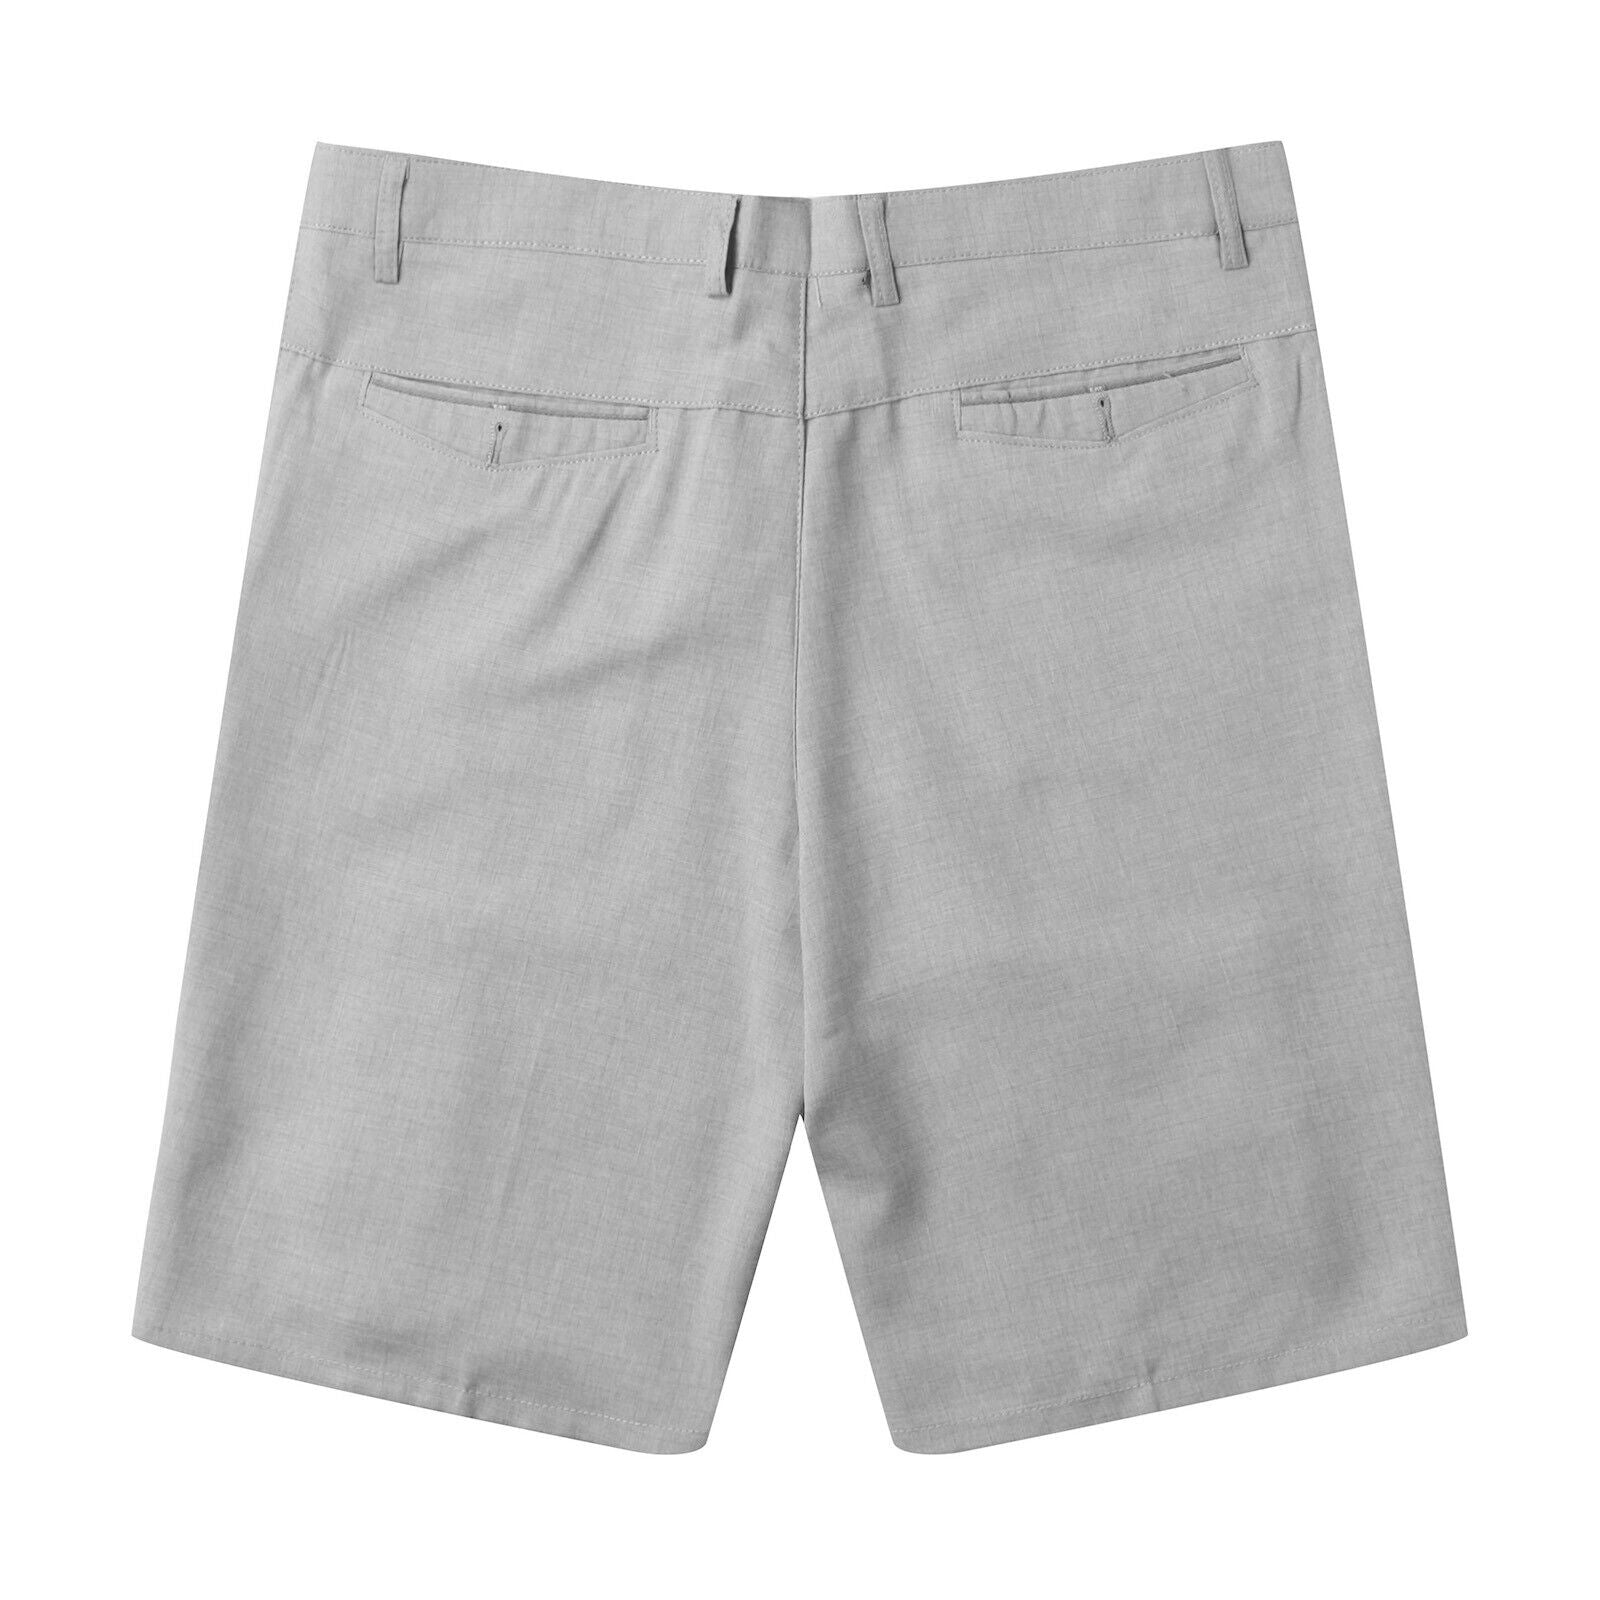 Men's Casual Shorts - Sleek, Pocketed Design